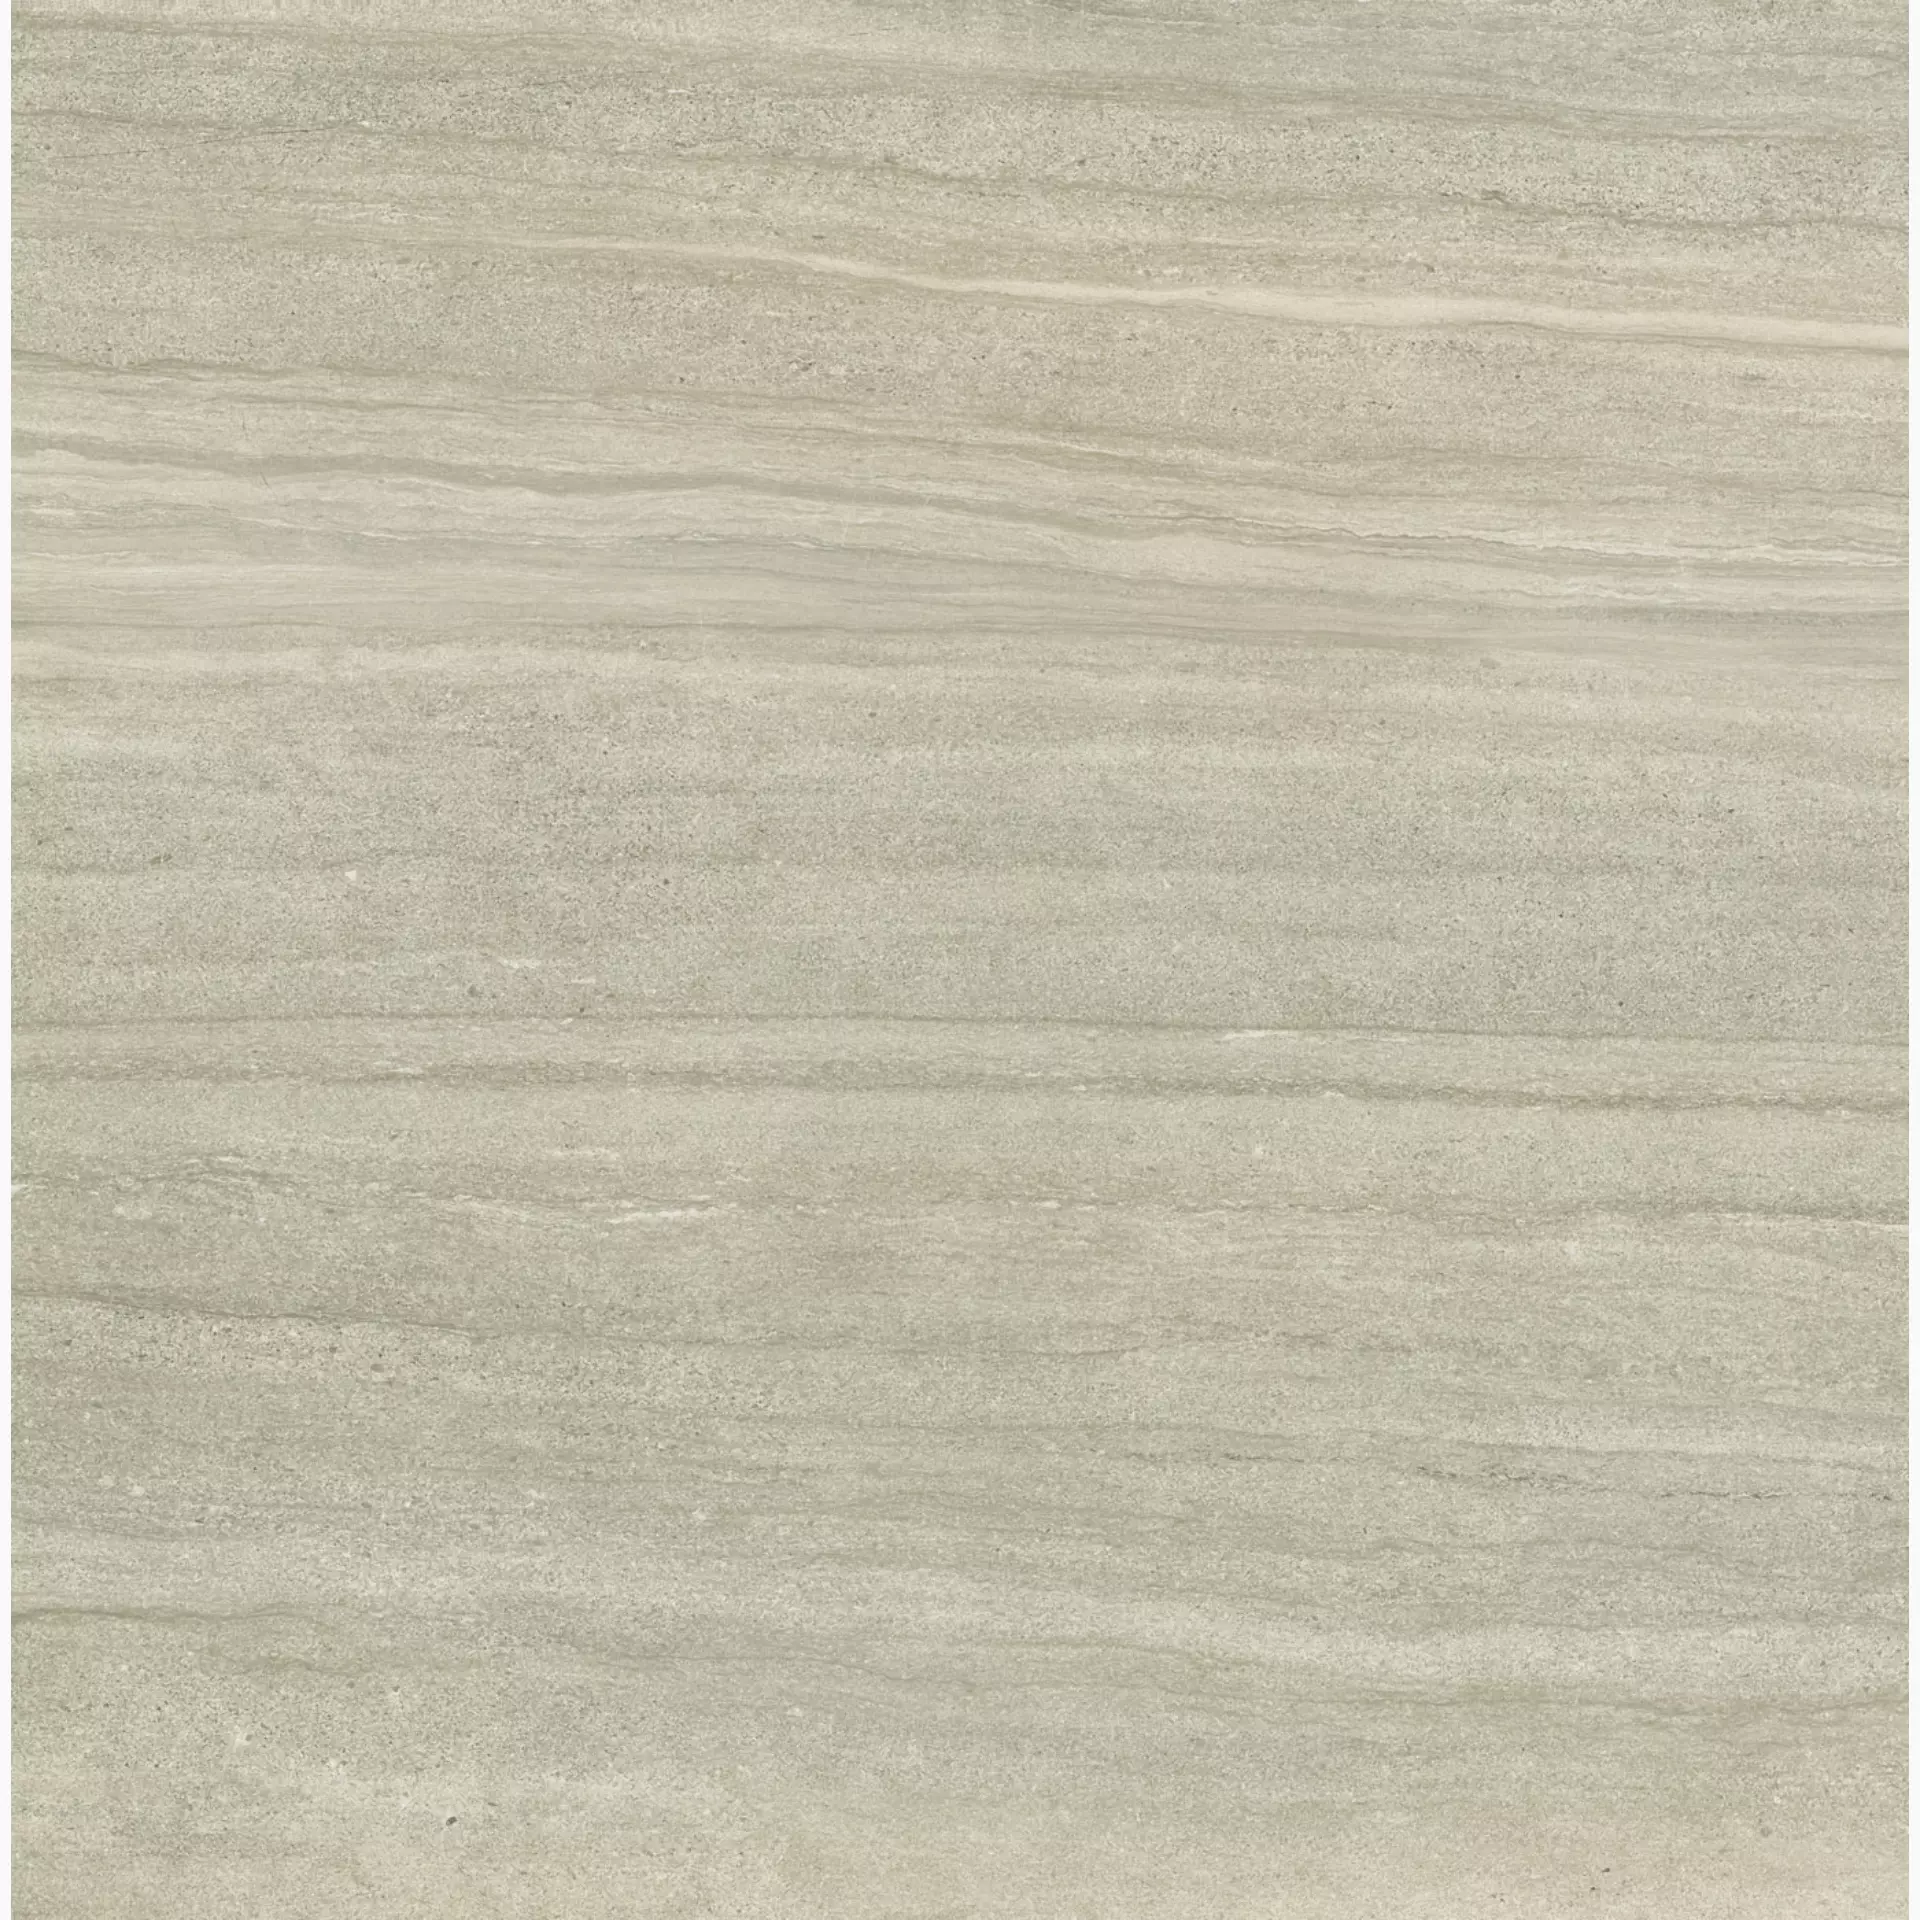 Ergon Stone Project Sand Naturale Falda E37Y 60x60cm rectified 9,5mm